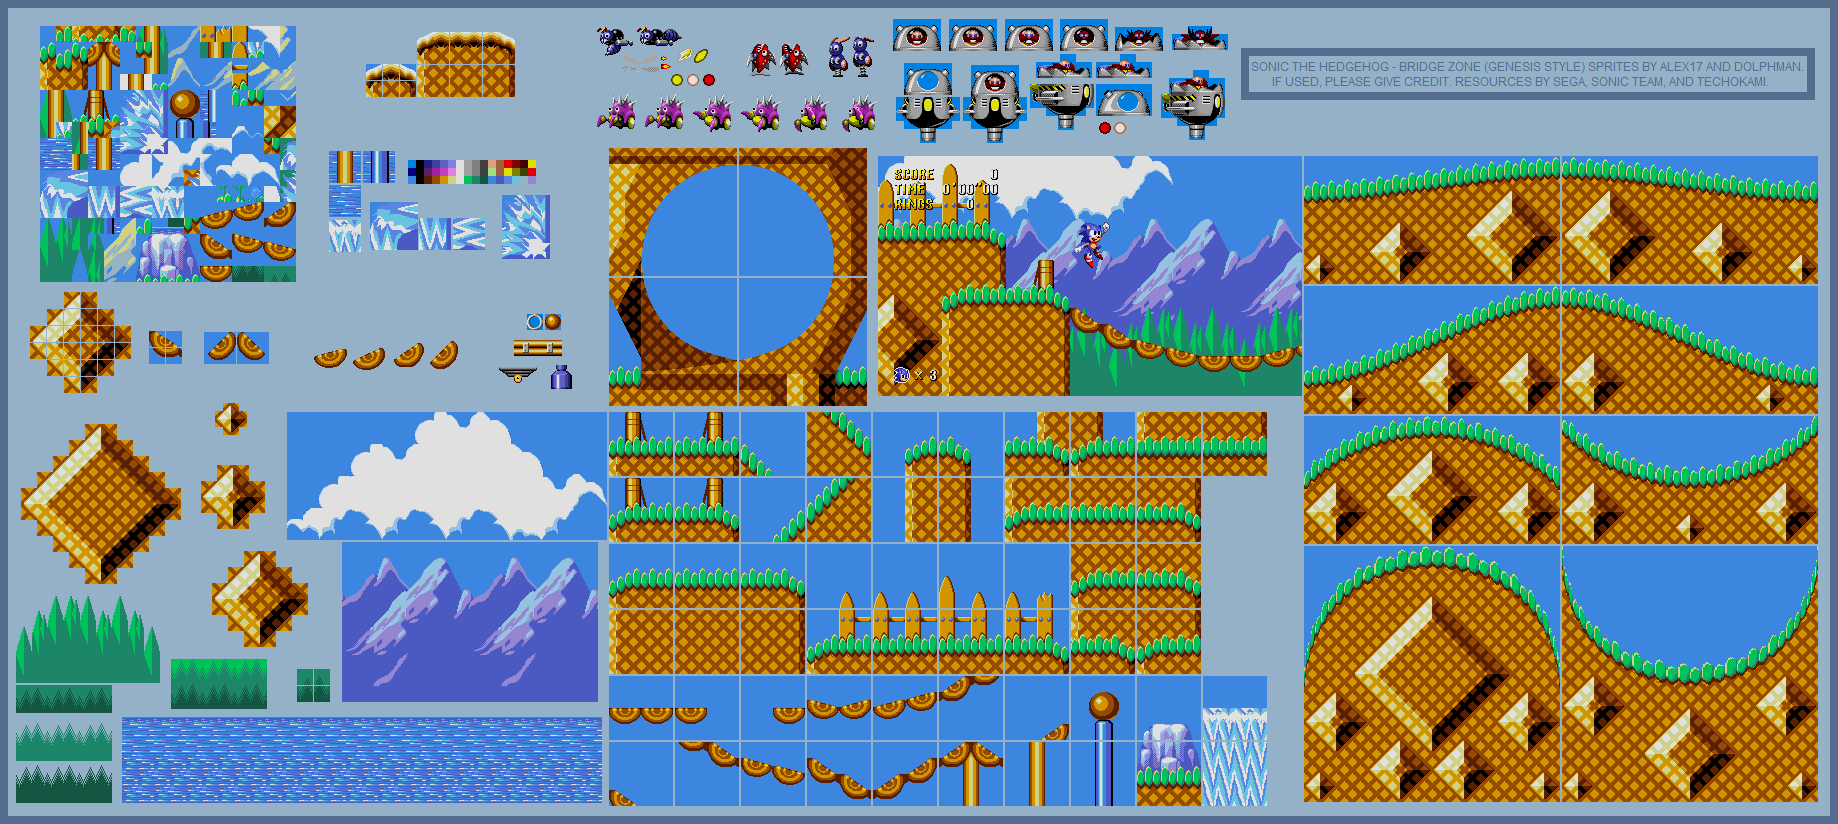 Sonic the Hedgehog Customs - Bridge Zone (Sonic Genesis-Style)